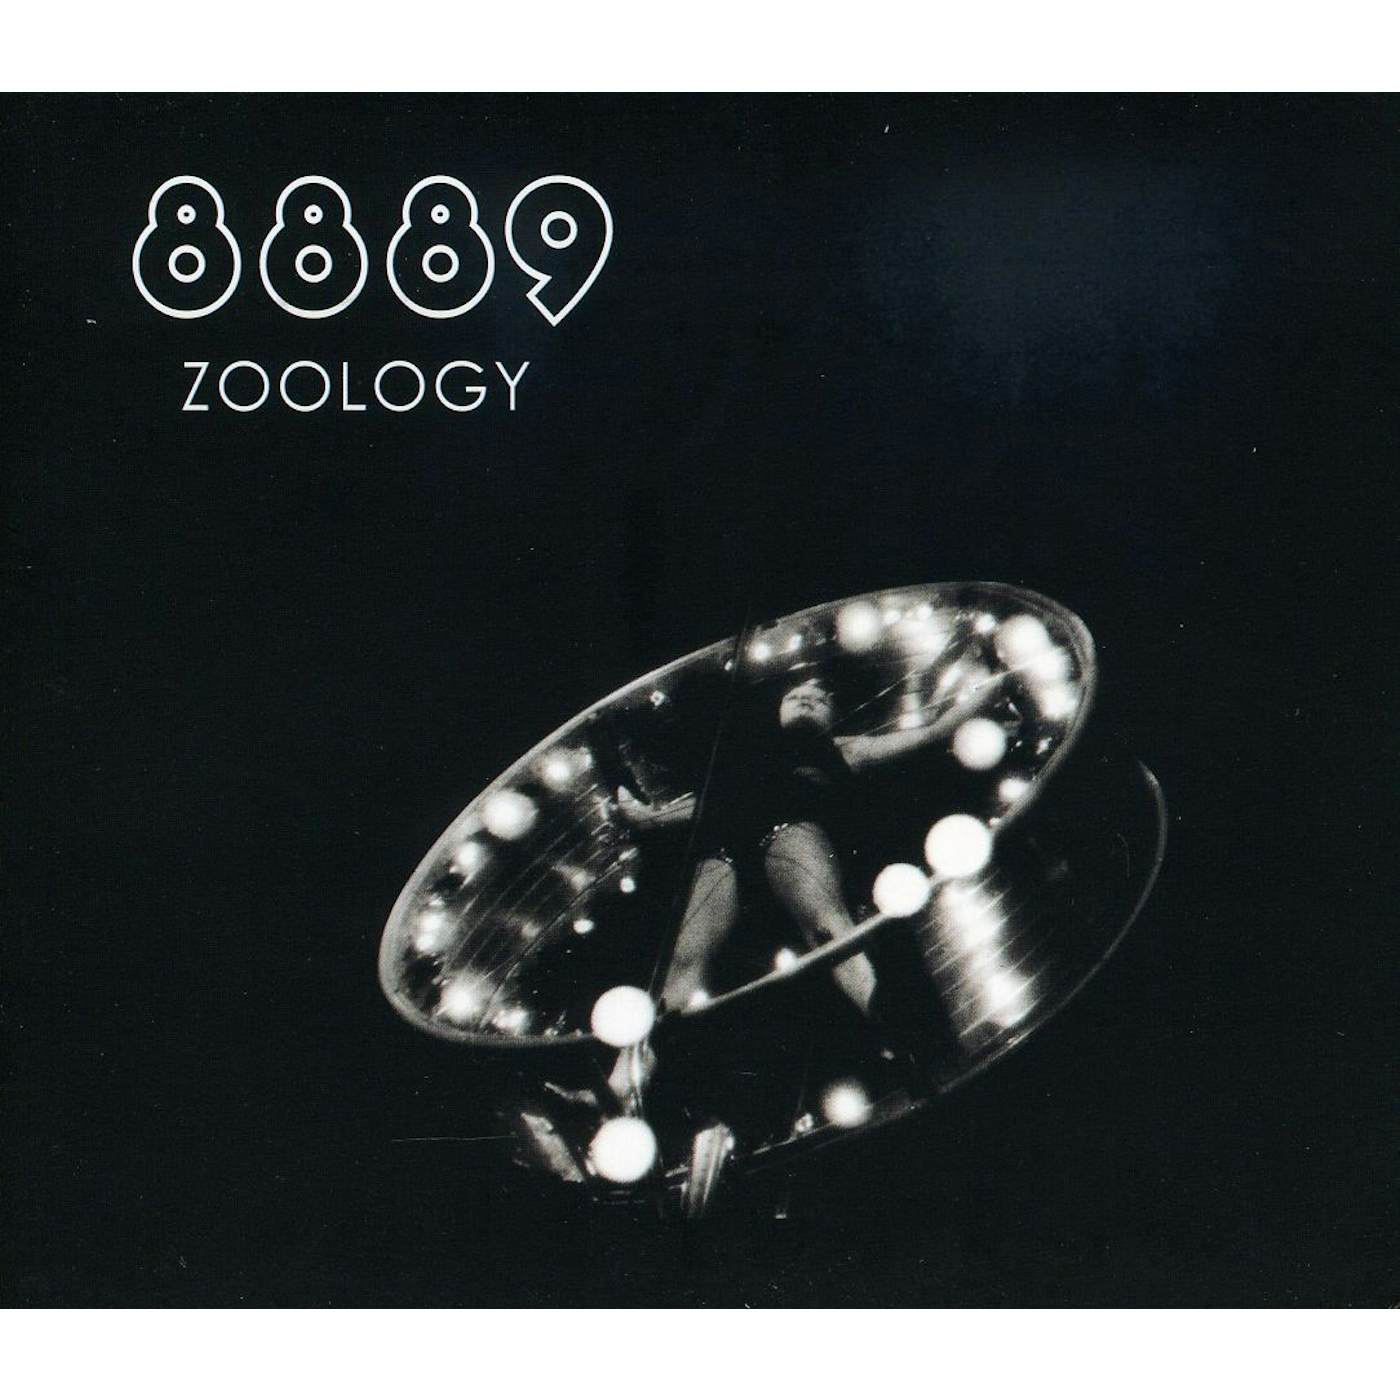 8889 ZOOLOGY CD